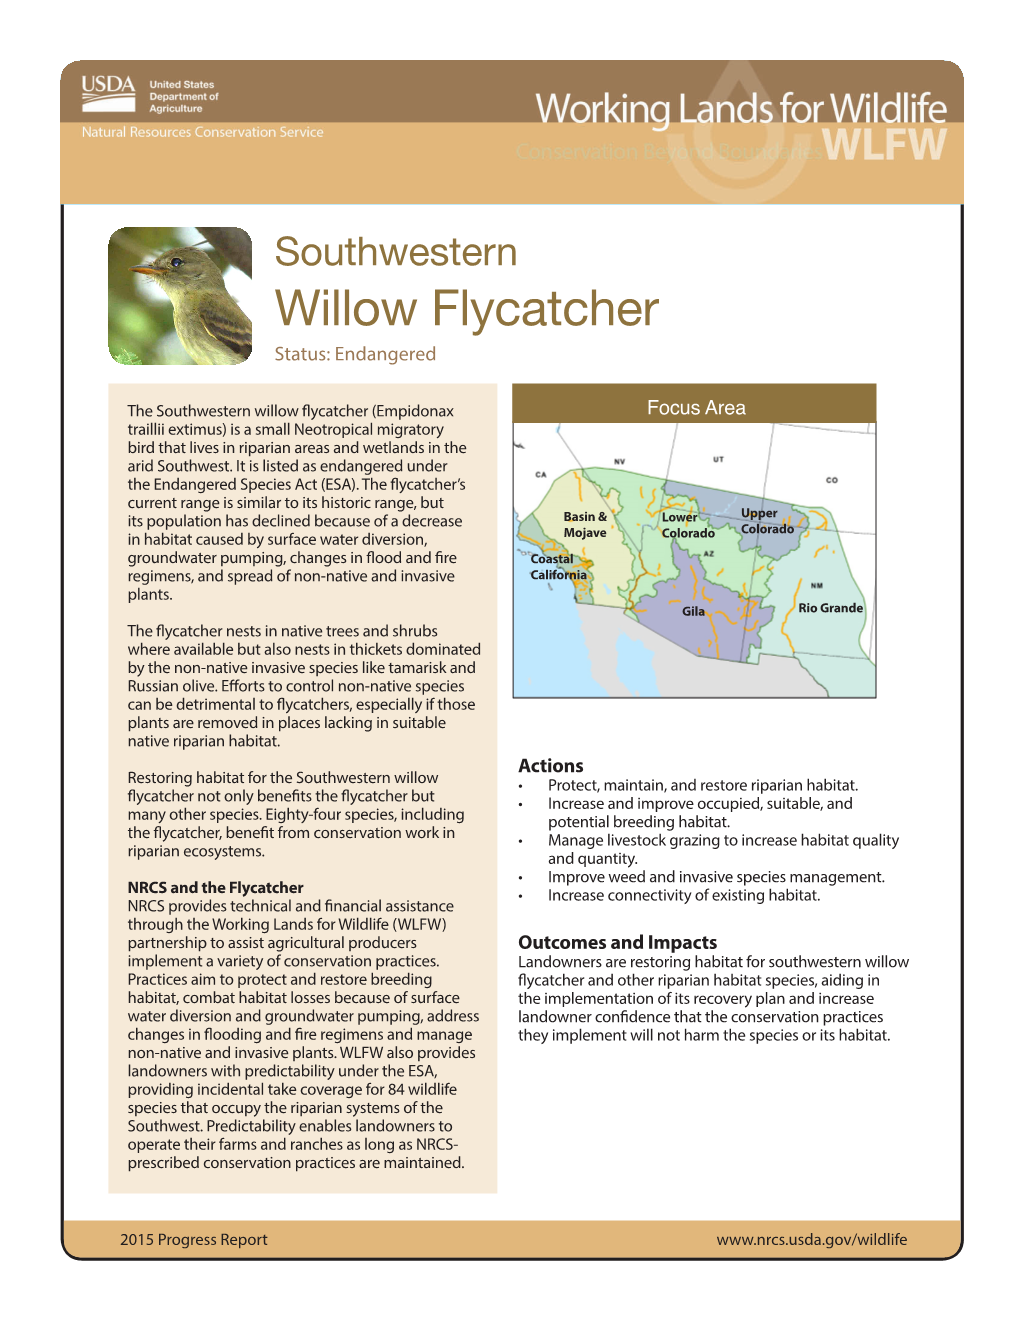 Willow Flycatcher Status: Endangered